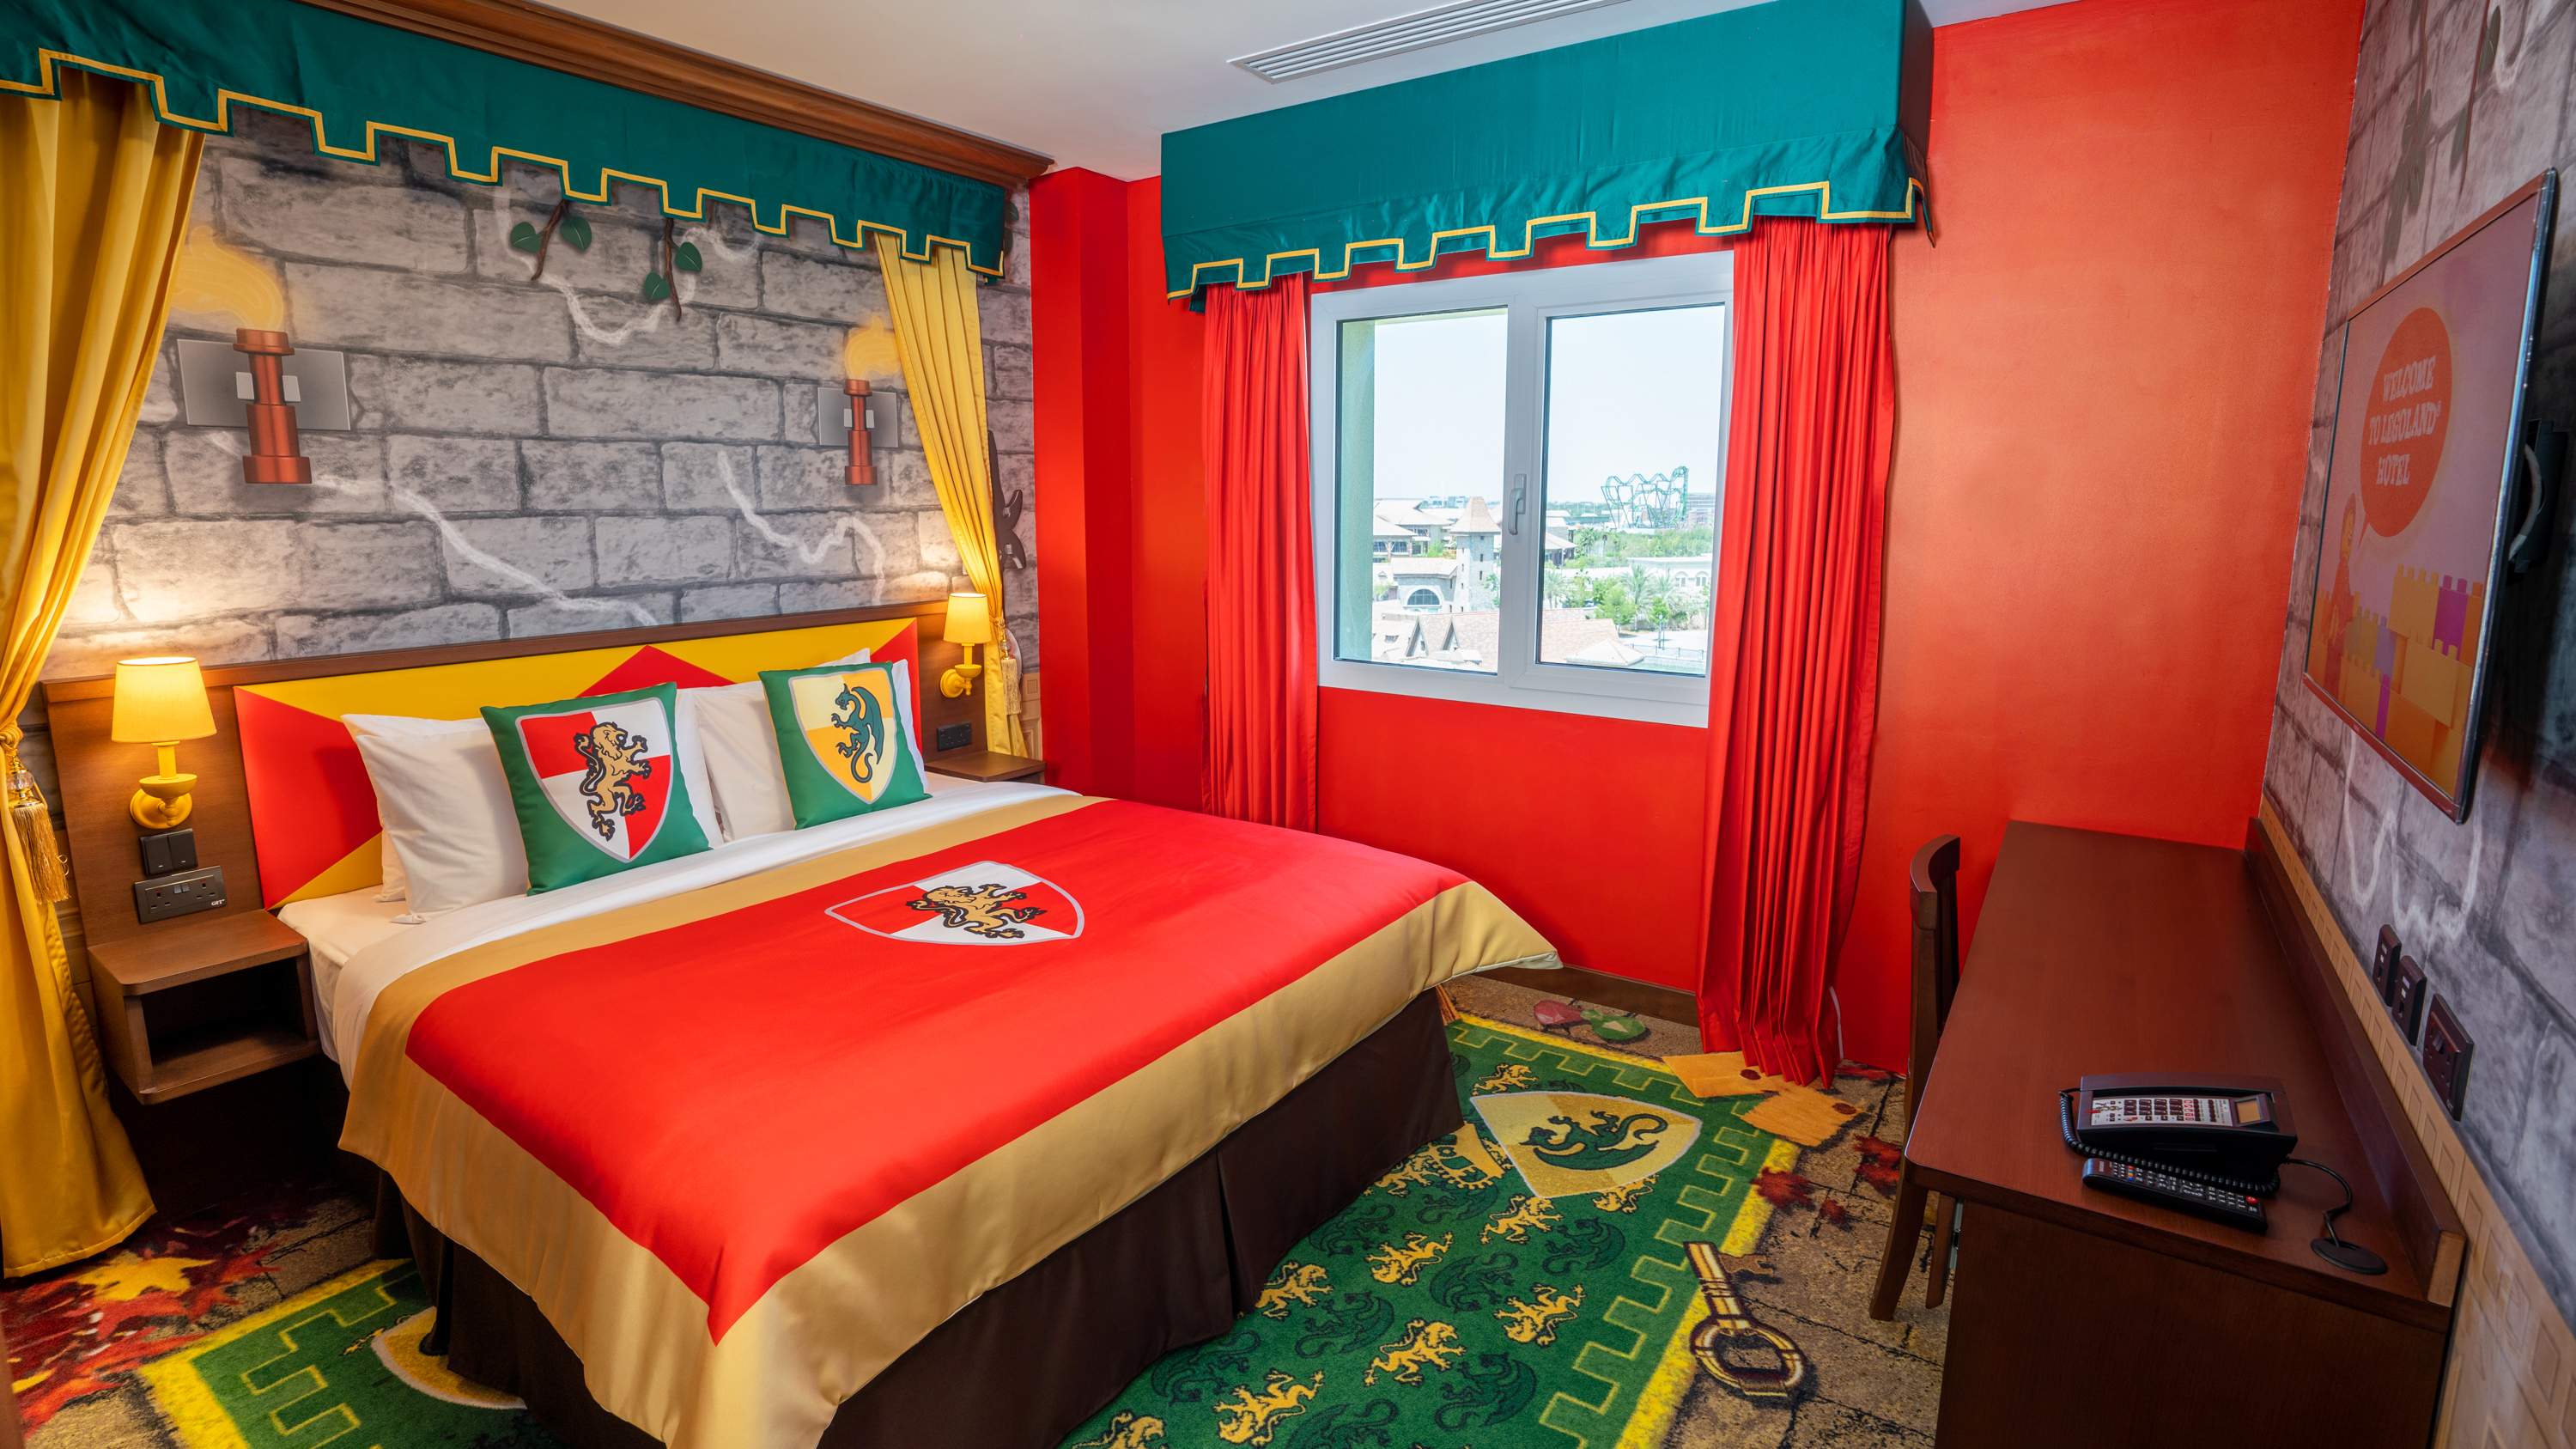 Legoland Hotel Room Interior Kingdom 8(PS)